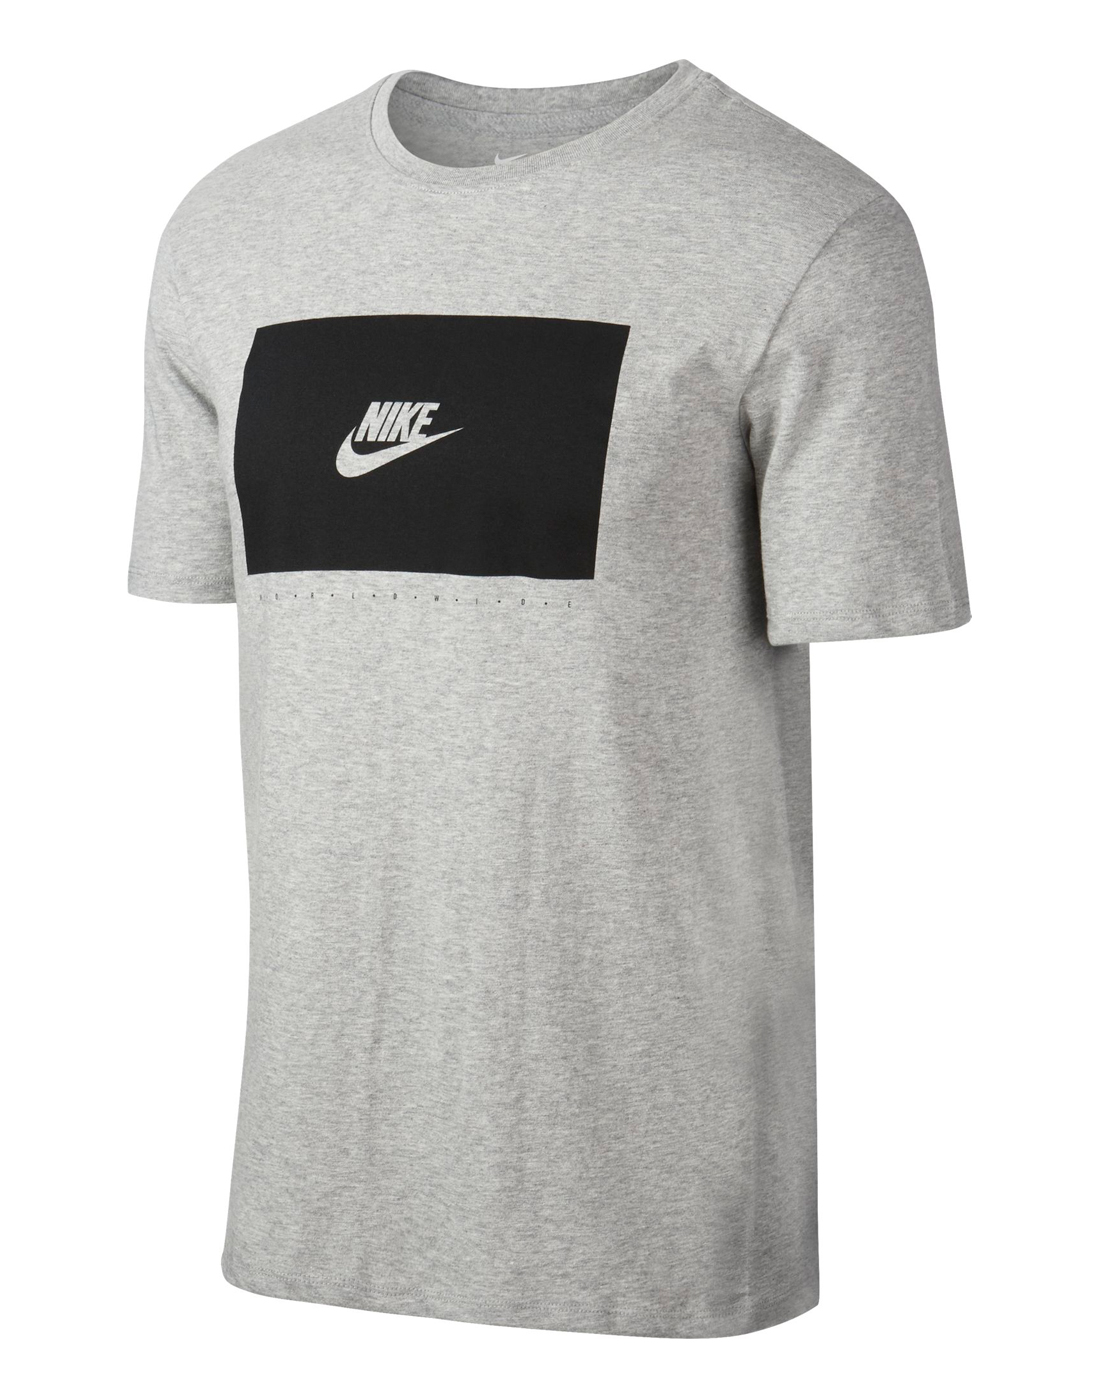 Nike Mens Trend T-Shirt - Grey | Life Style Sports UK